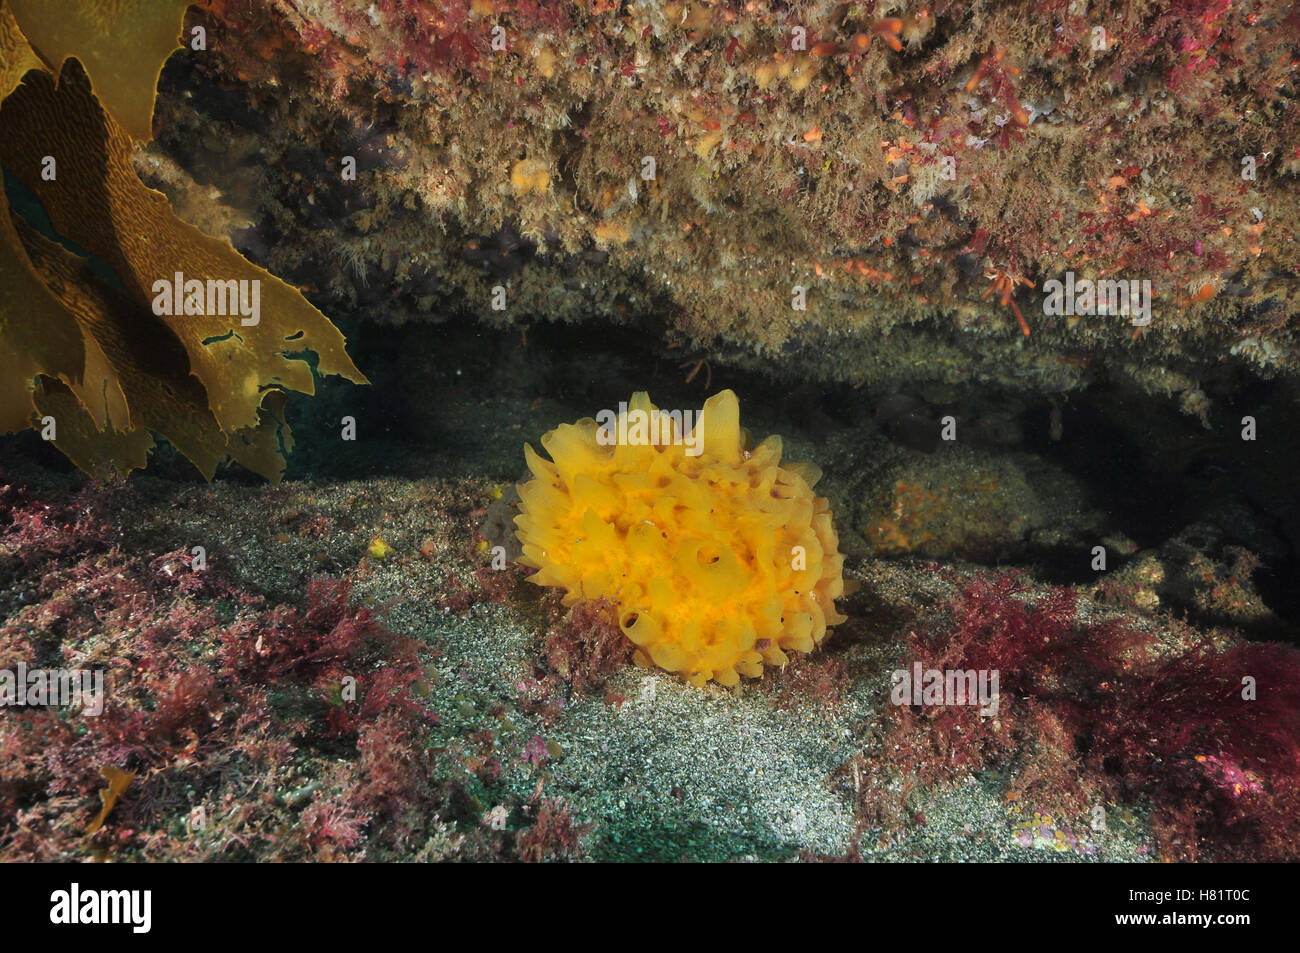 Yellow sponge under rocky overhang Stock Photo